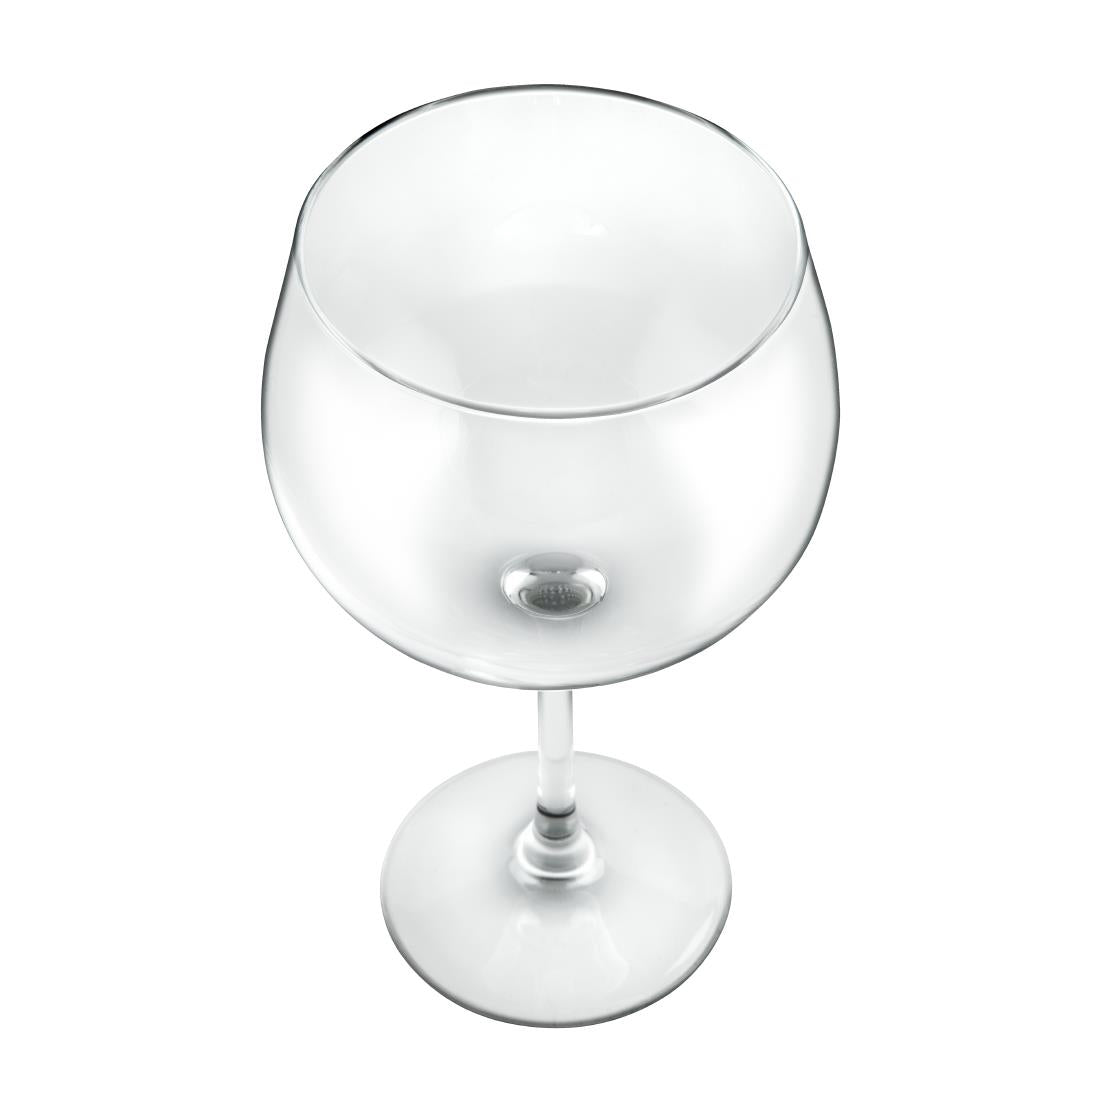 Arcoroc Juniper Gin Cocktail Glasses 24oz (Pack of 6) JD Catering Equipment Solutions Ltd